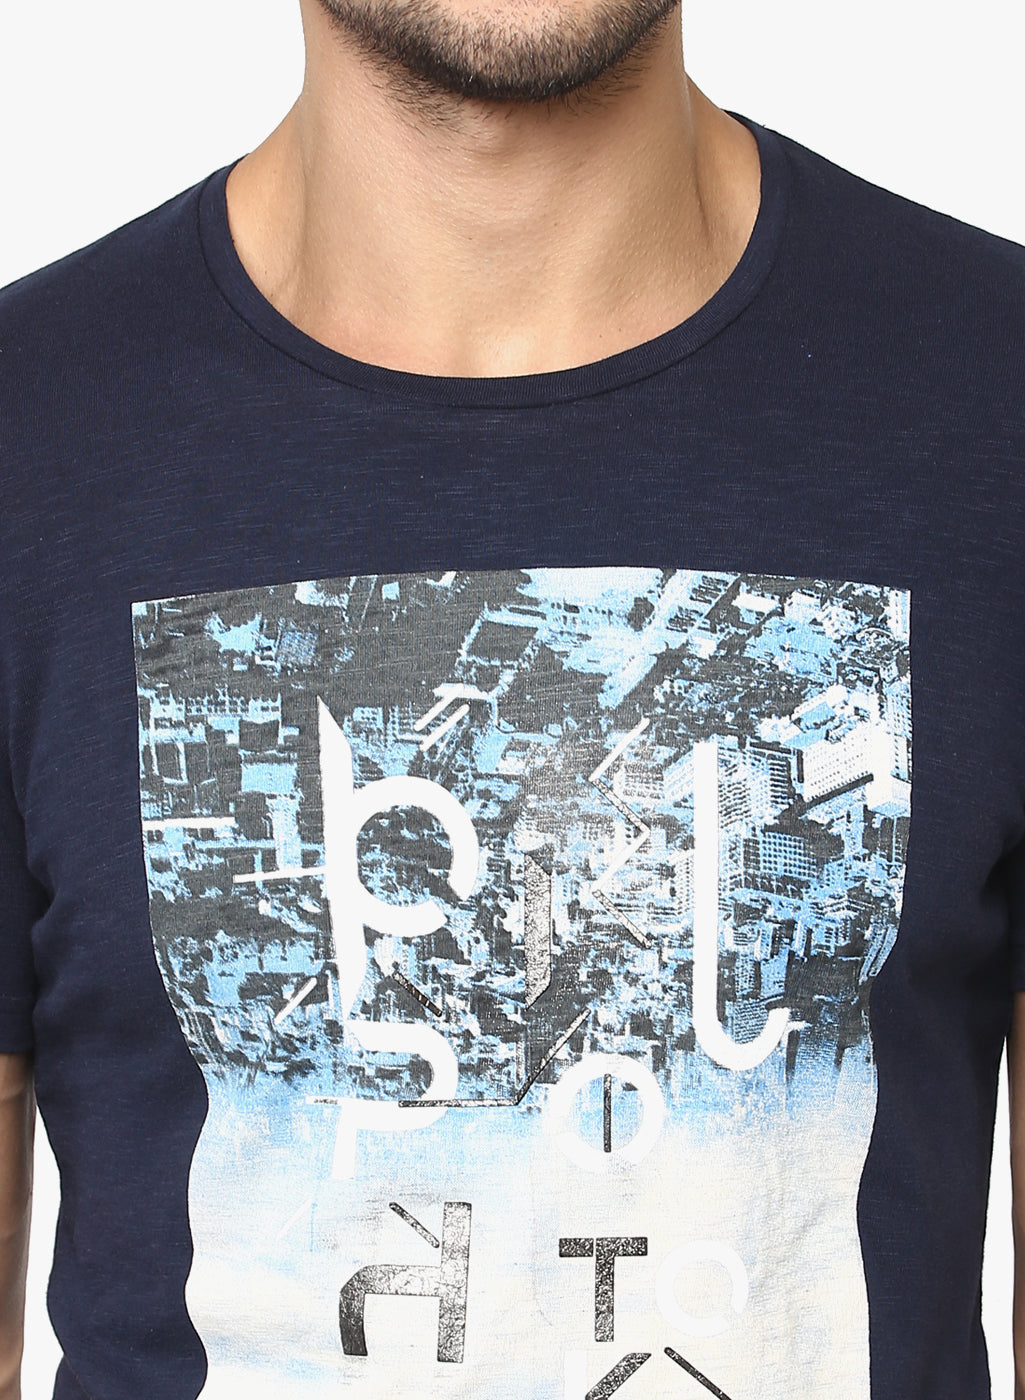 Navy Blue Graphic printed T-Shirt - Men T-Shirts